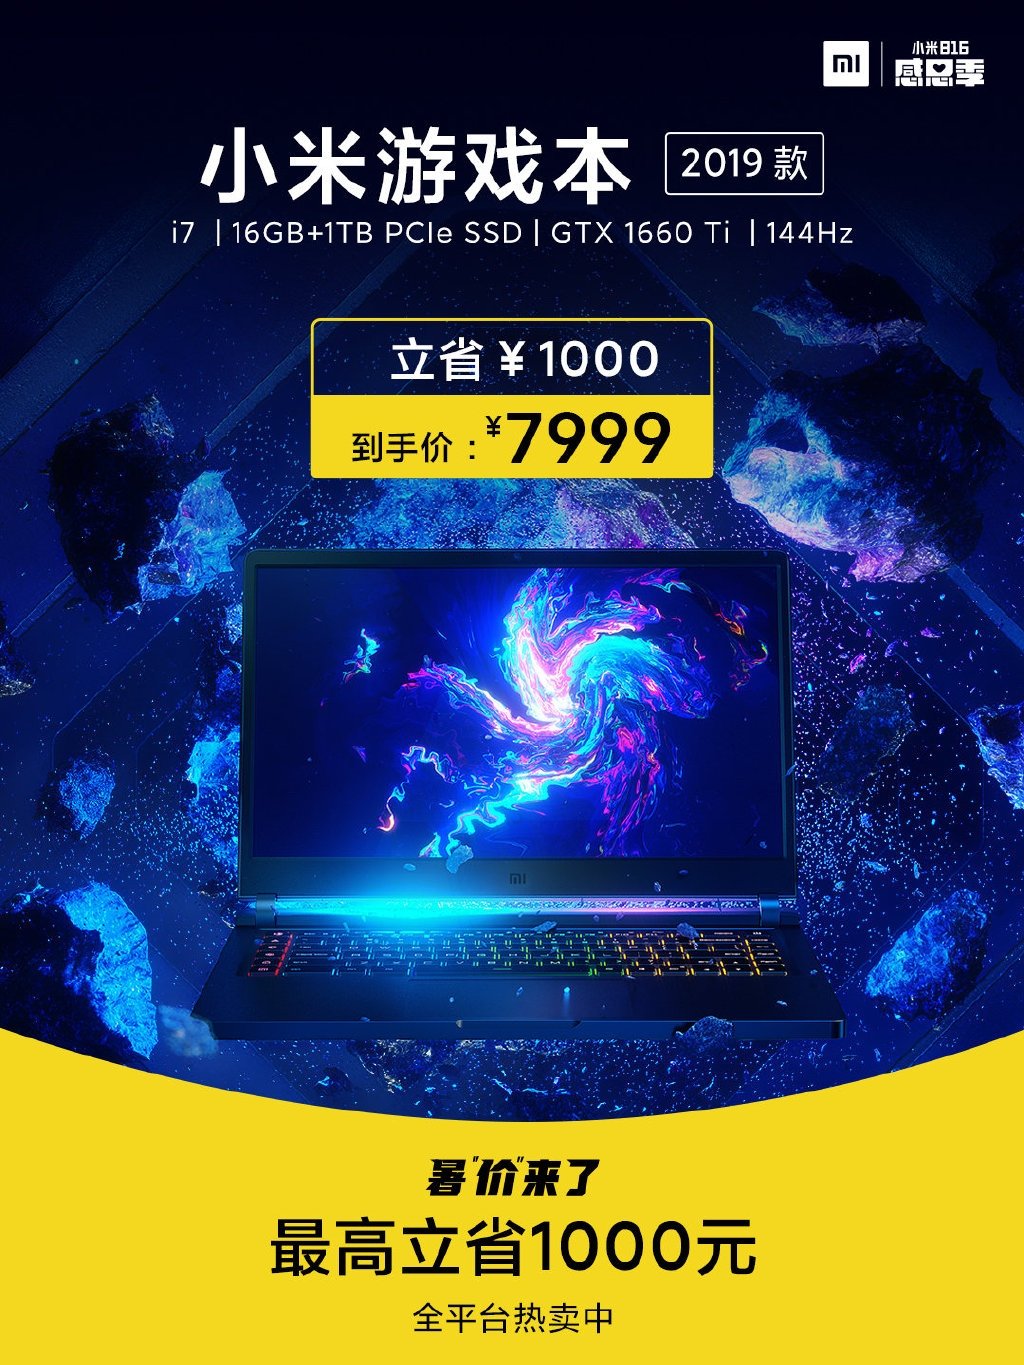 Xiaomi Mi Gaming Laptop 2019 Discount 